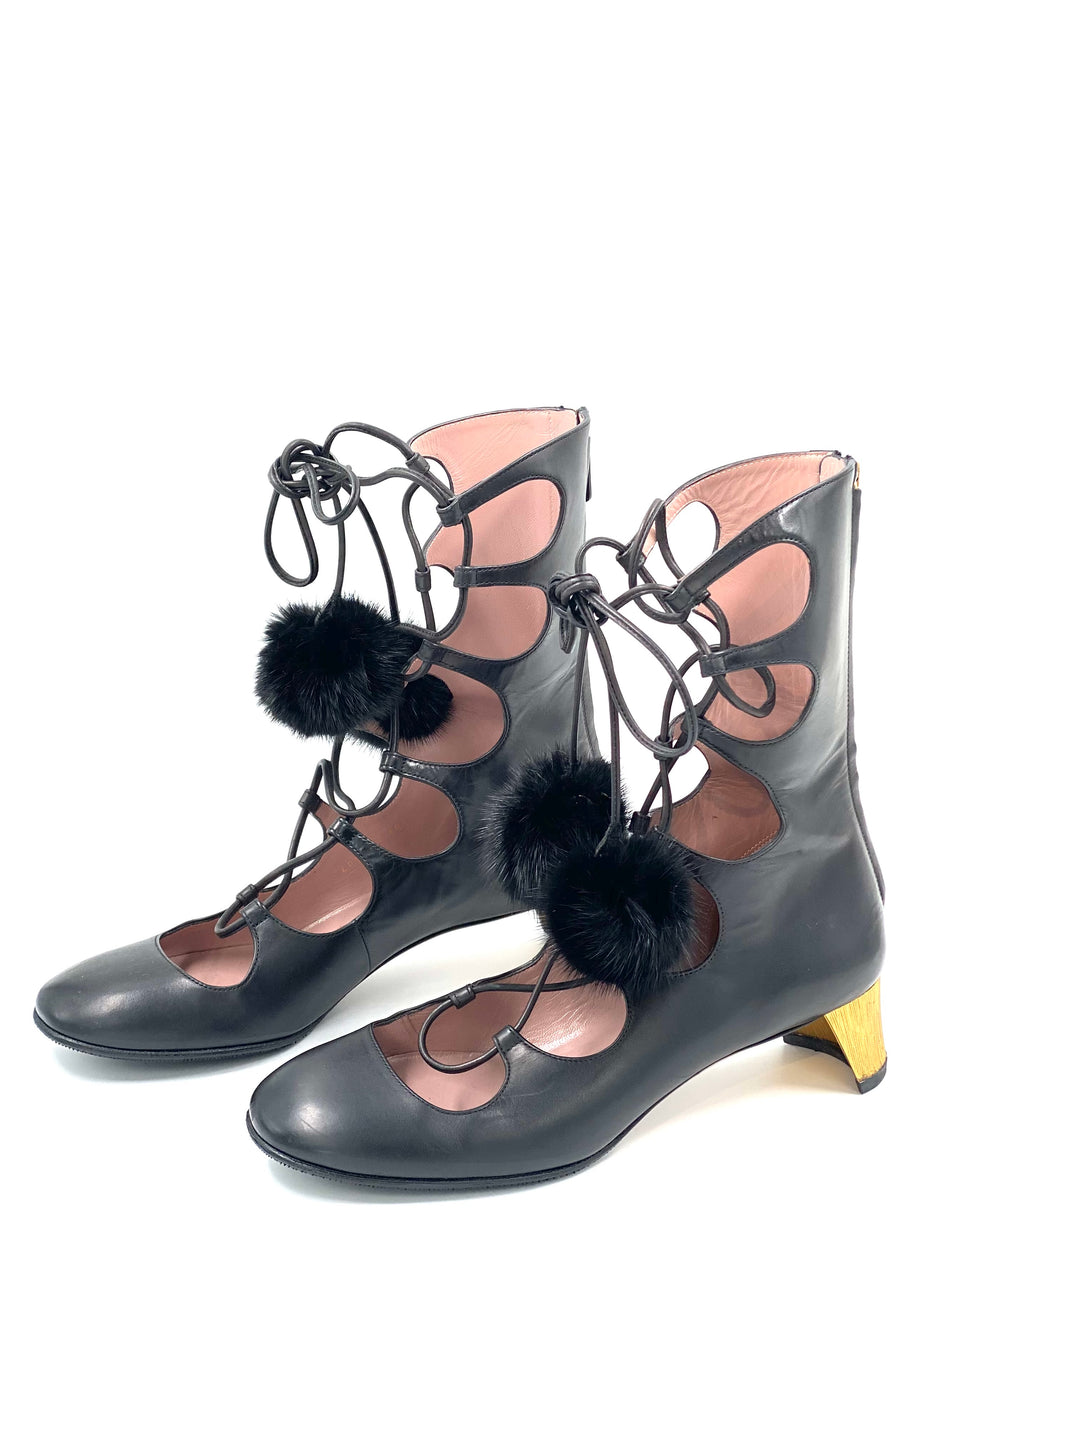 Gucci Ankle-Boots Heloise aus Leder in schwarz